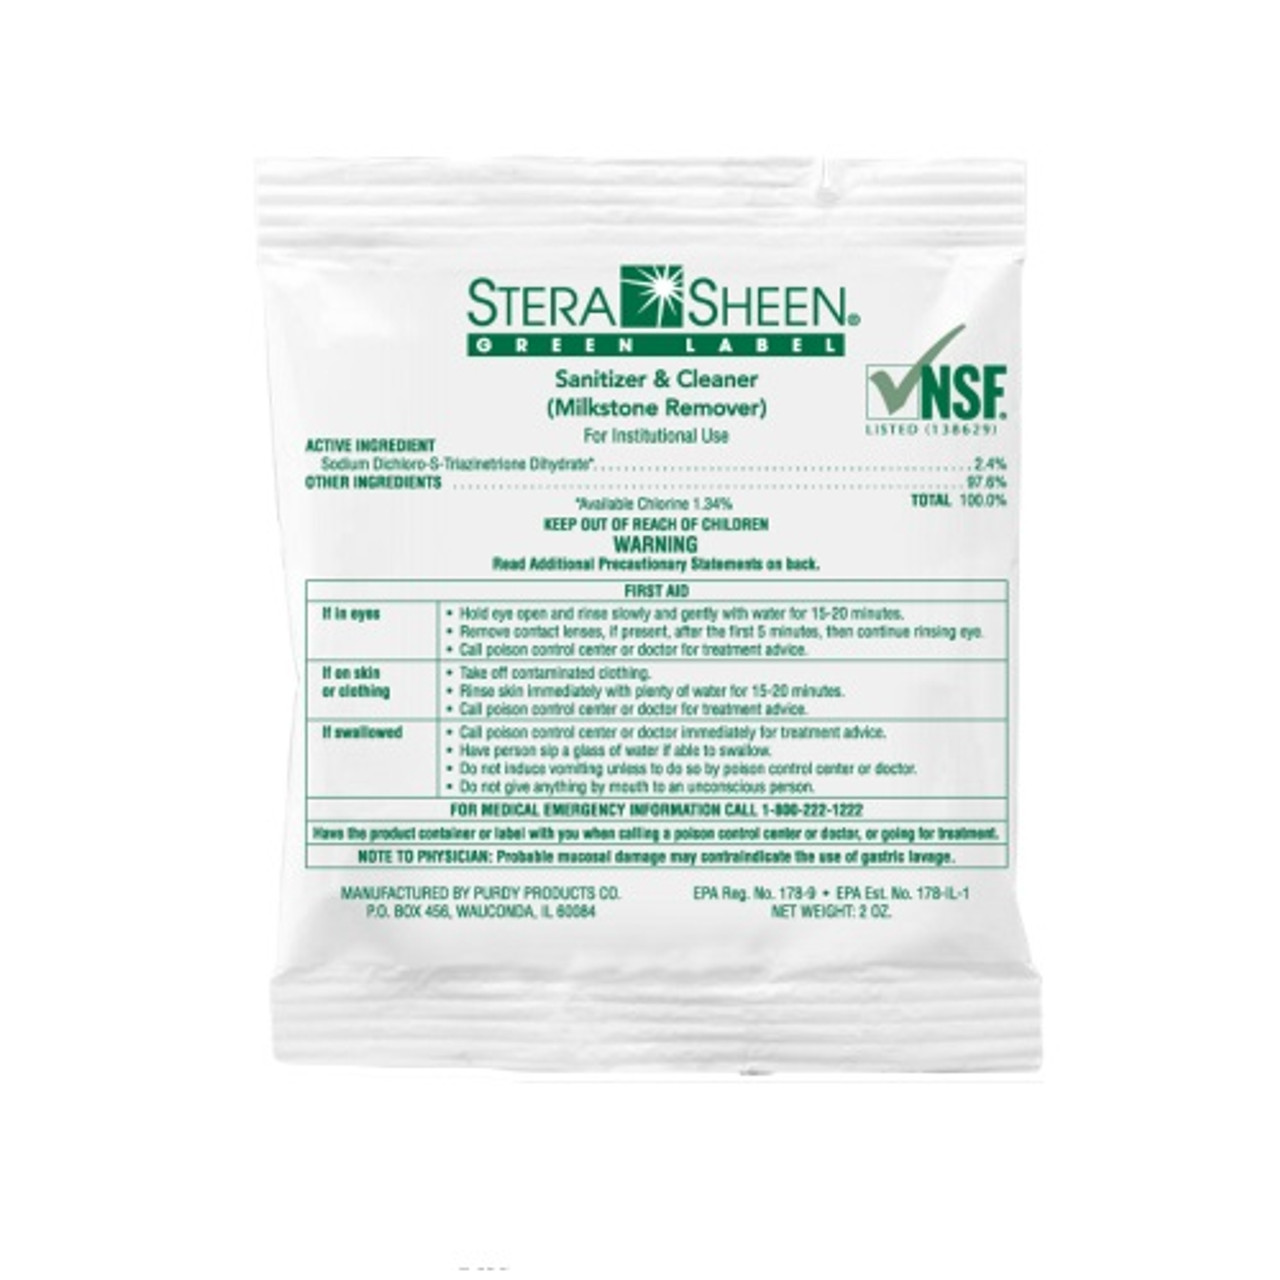 Stera-Sheen Green Label Sanitizer 2oz Packets 100ct